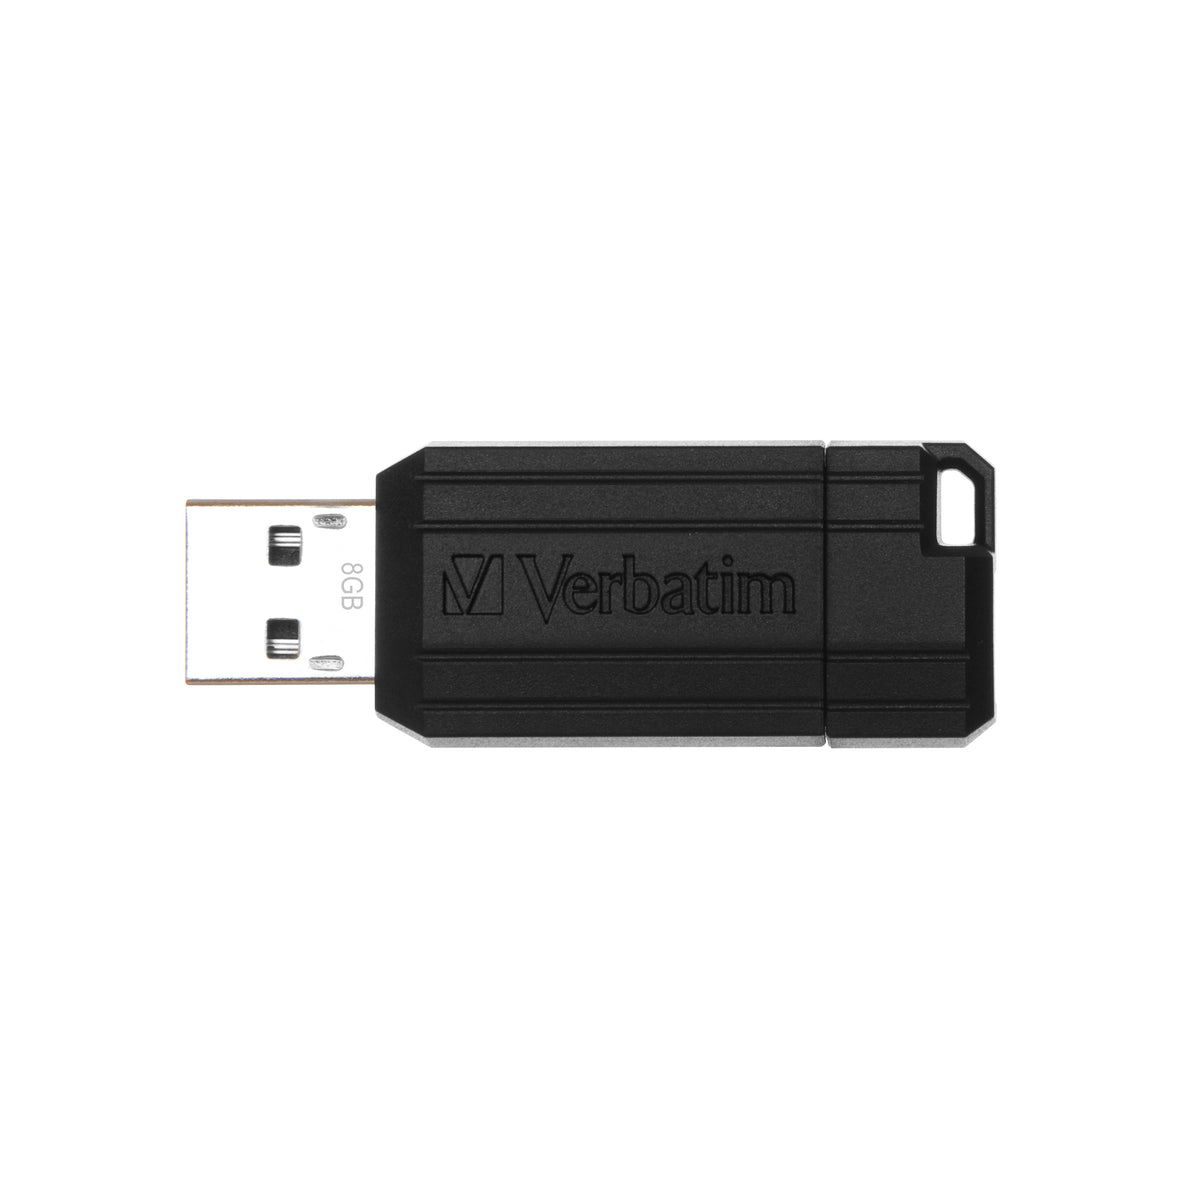 USB flash disk 8GB Verbatim PinStripe, 2.0 (49062)